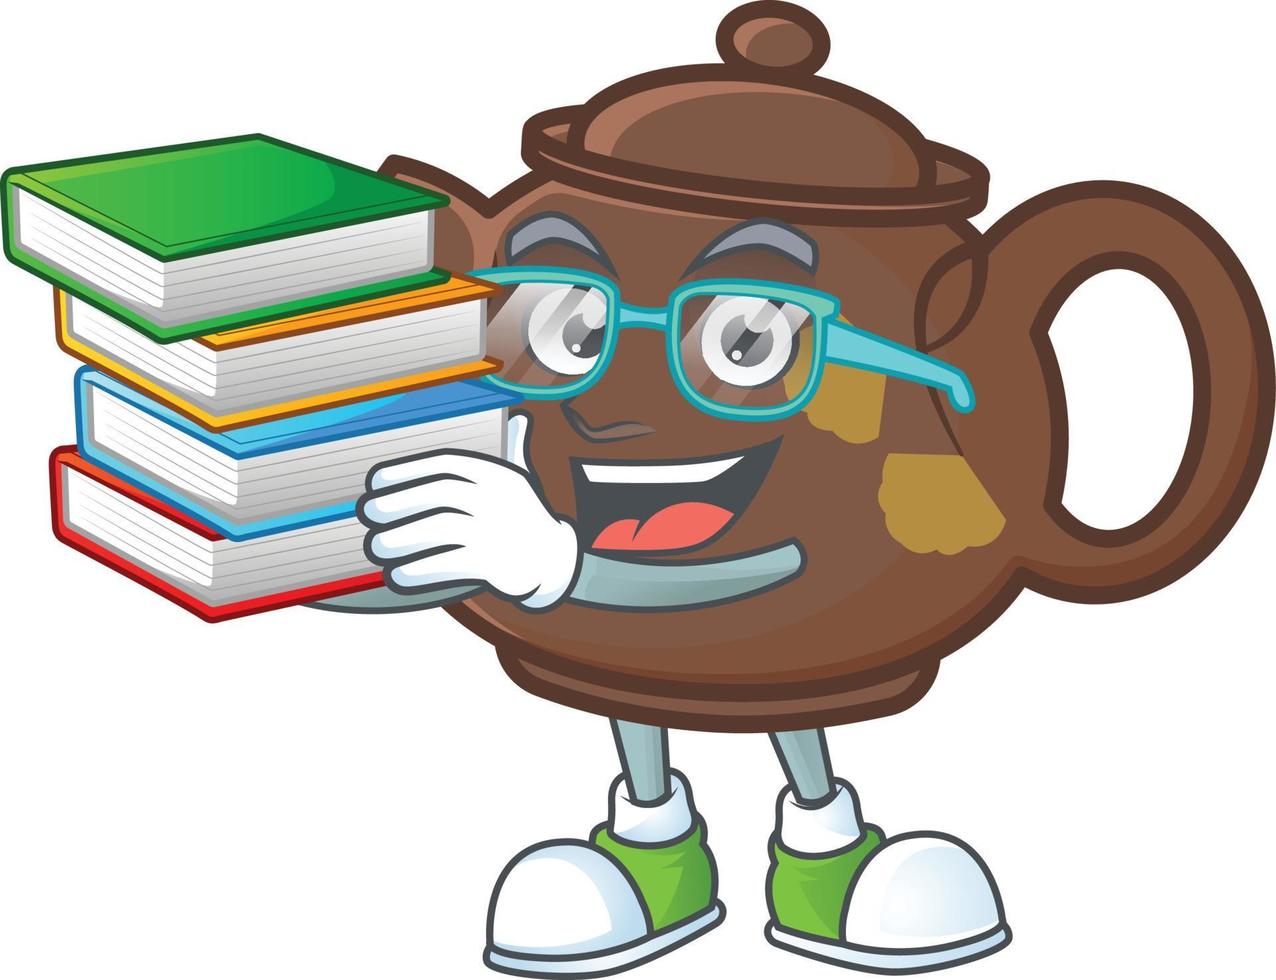 Teapot cartoon character style vector